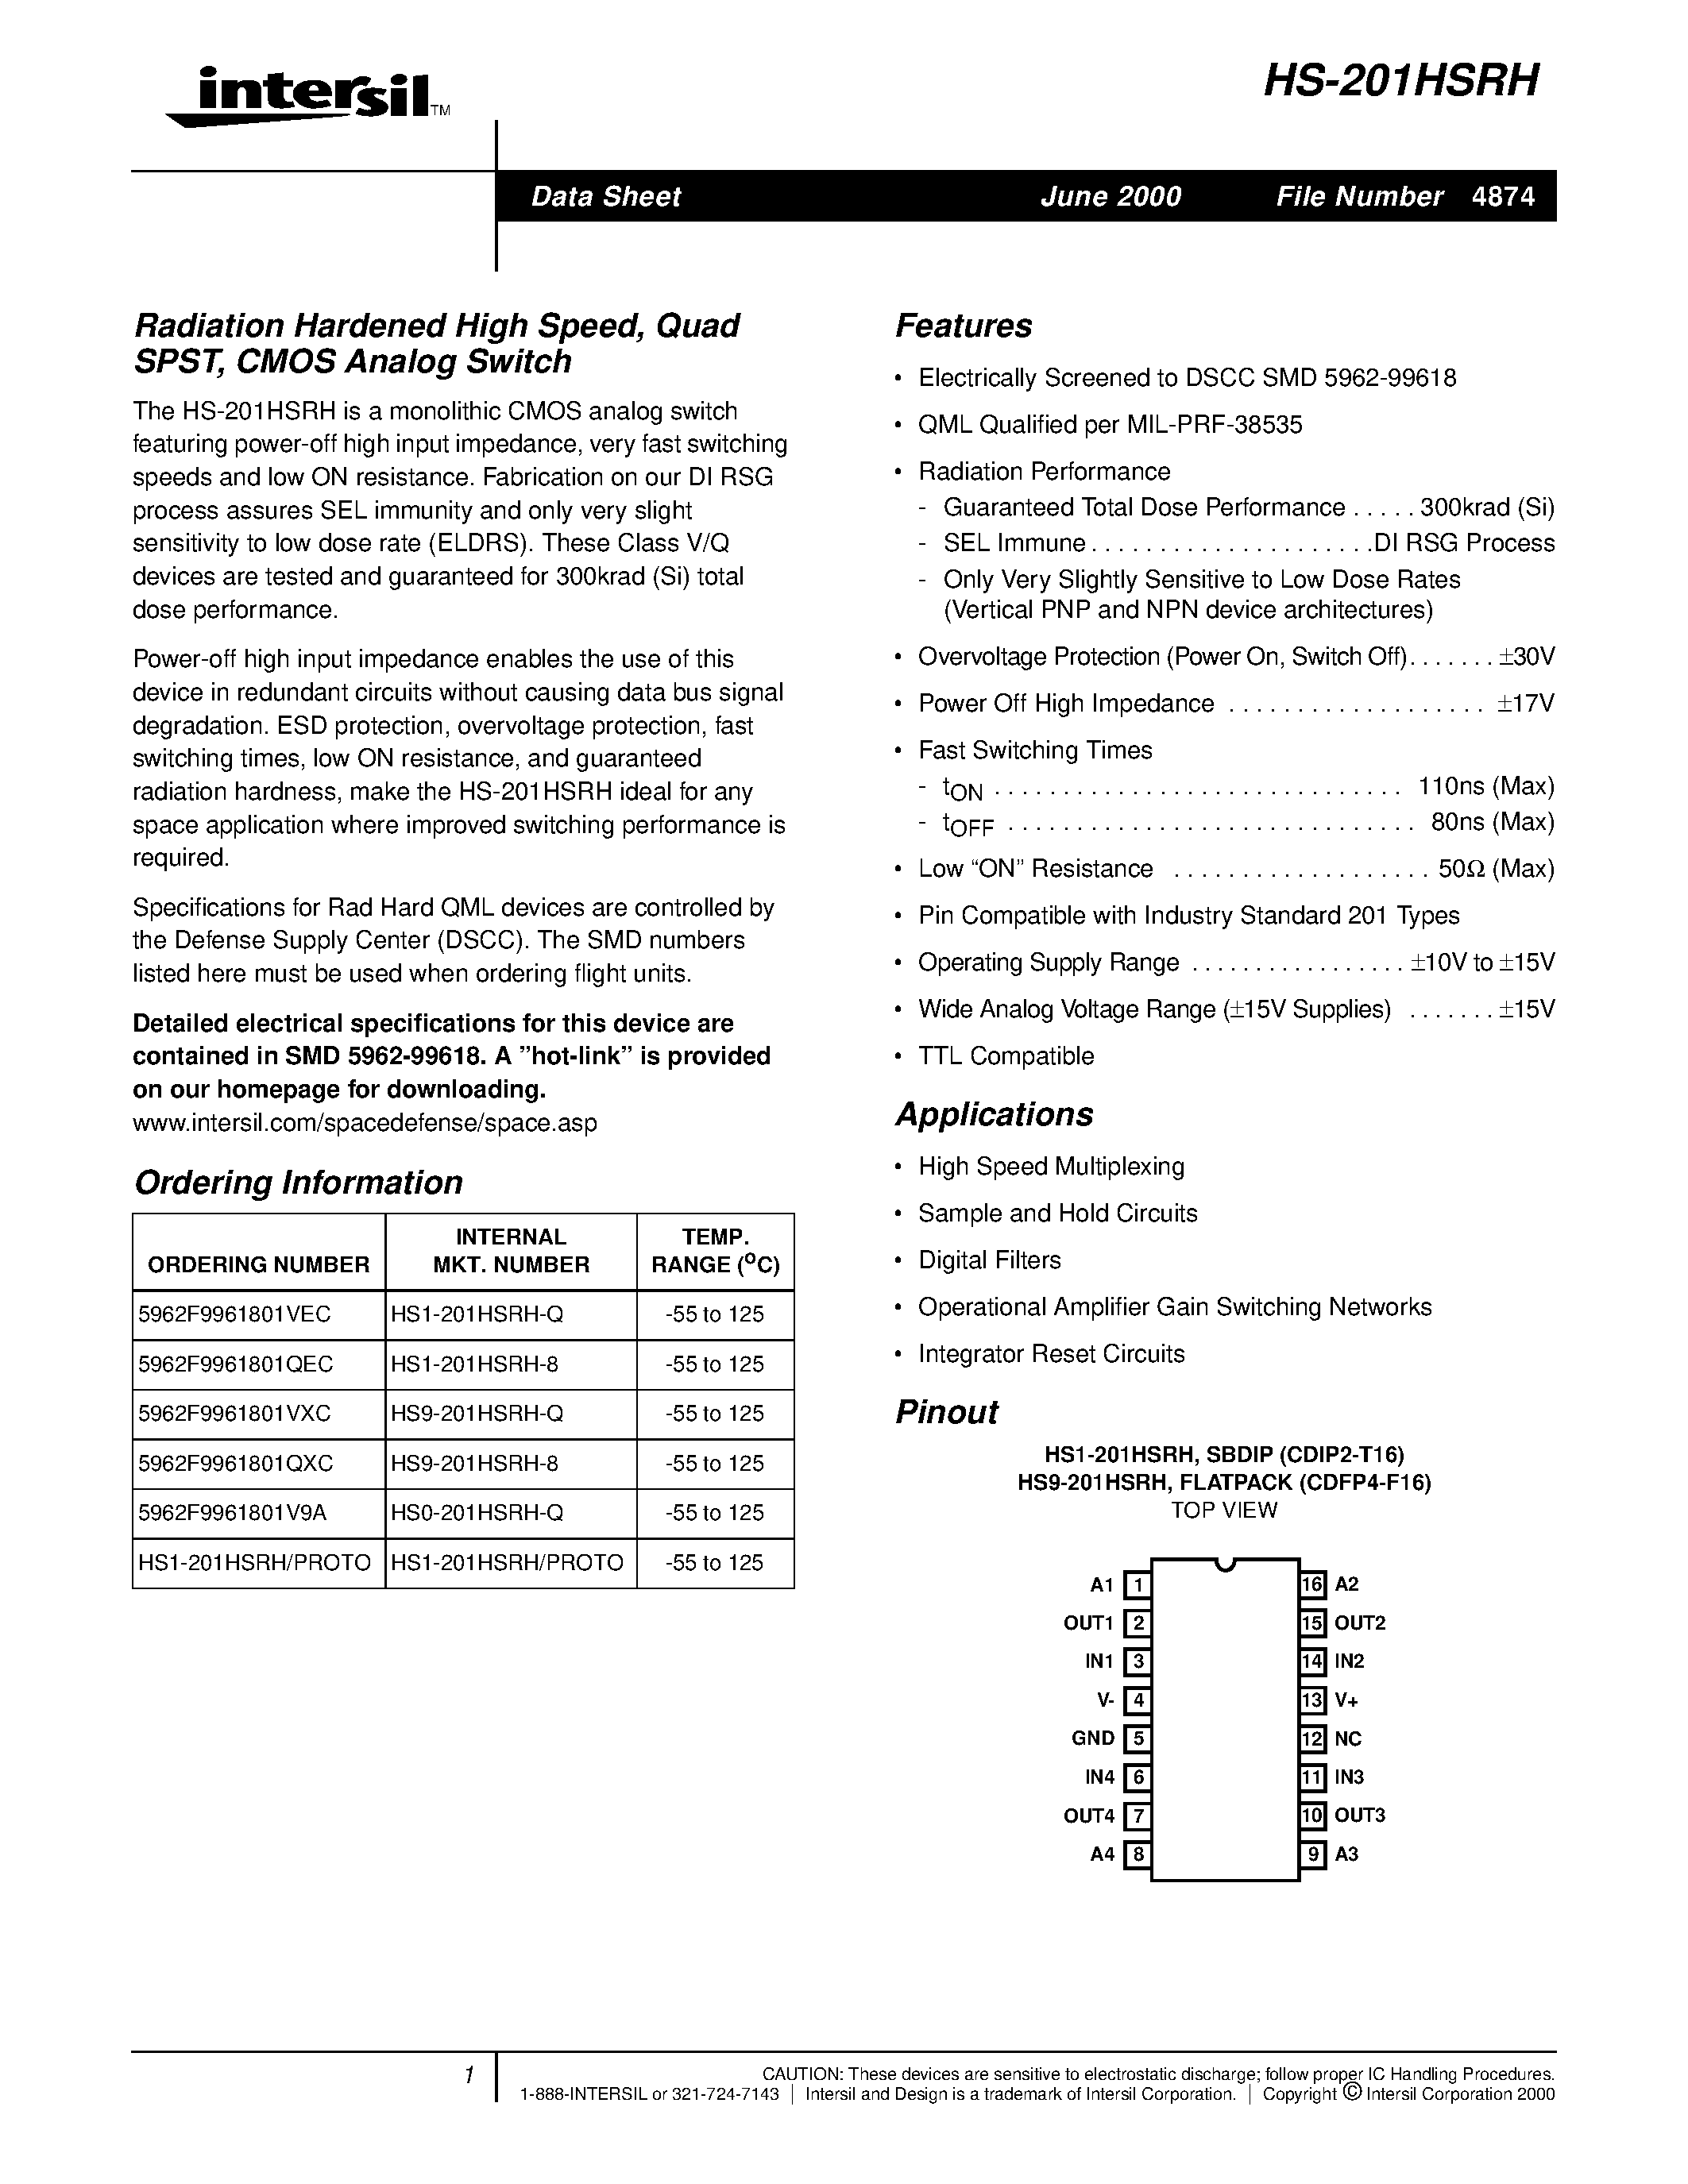 Даташит HS1-201HSRH-Q - Radiation Hardened High Speed/ Quad SPST/ CMOS Analog Switch страница 1